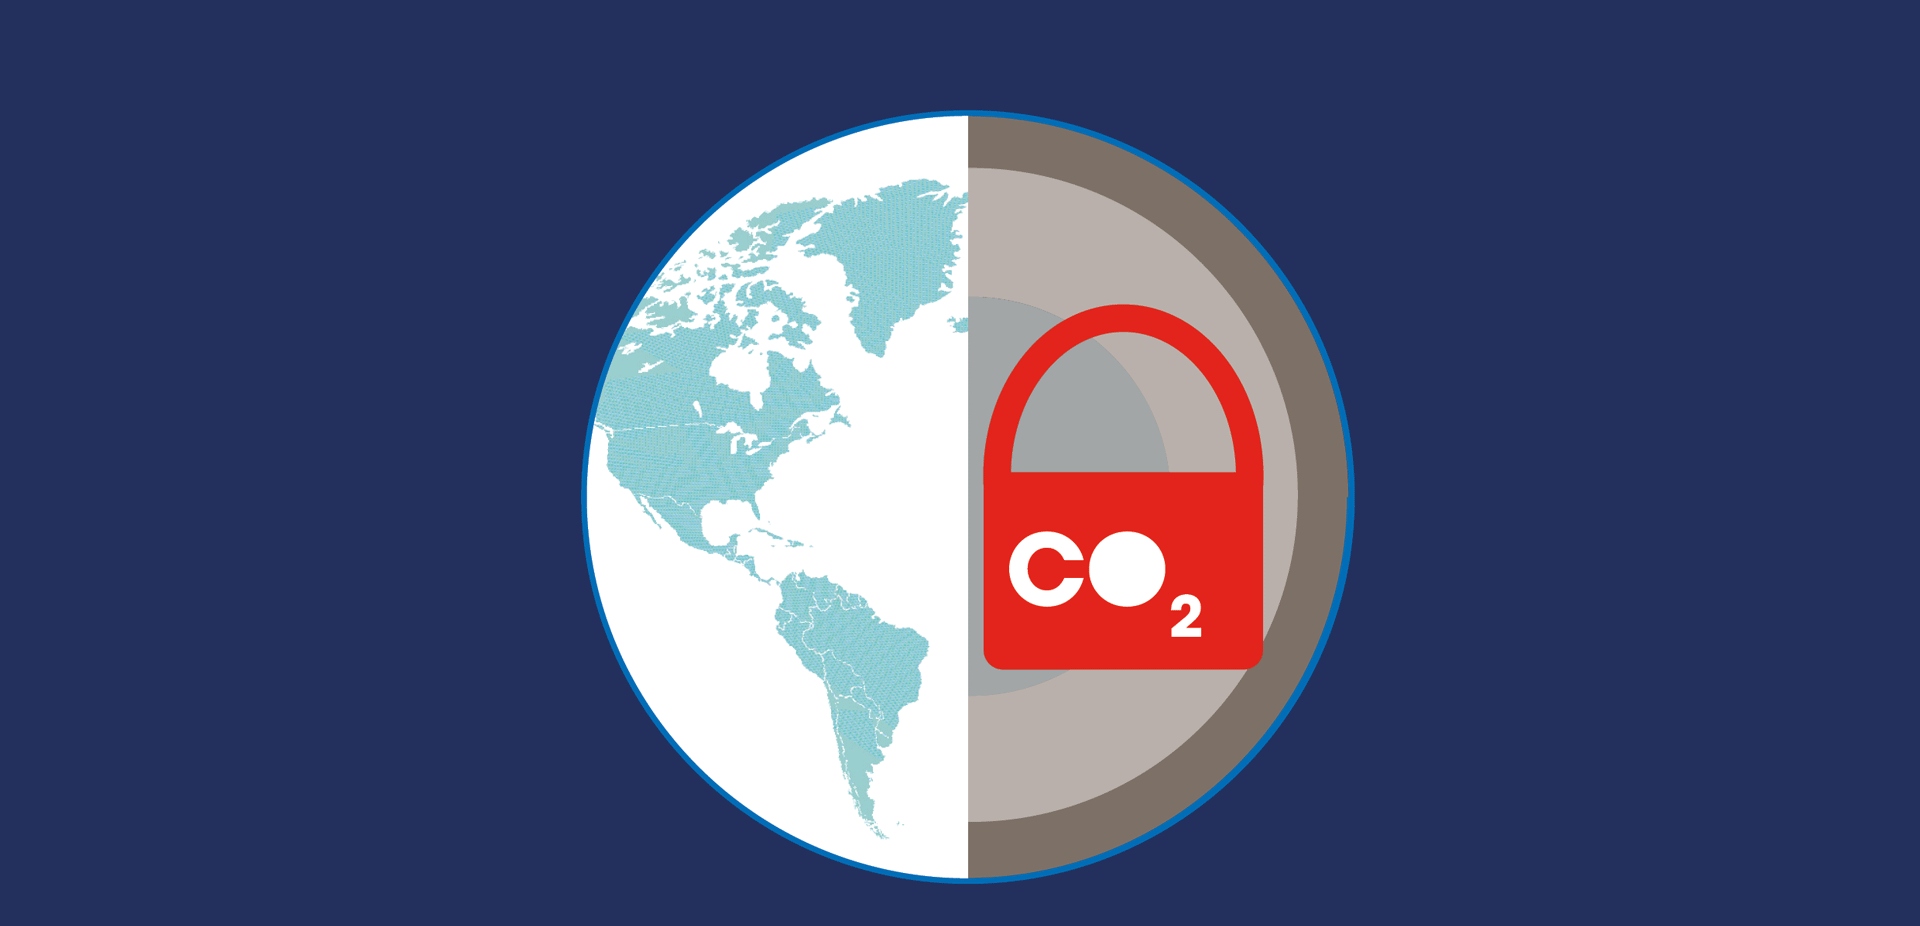 Carbon capture, utilisation and storage (CCUS)